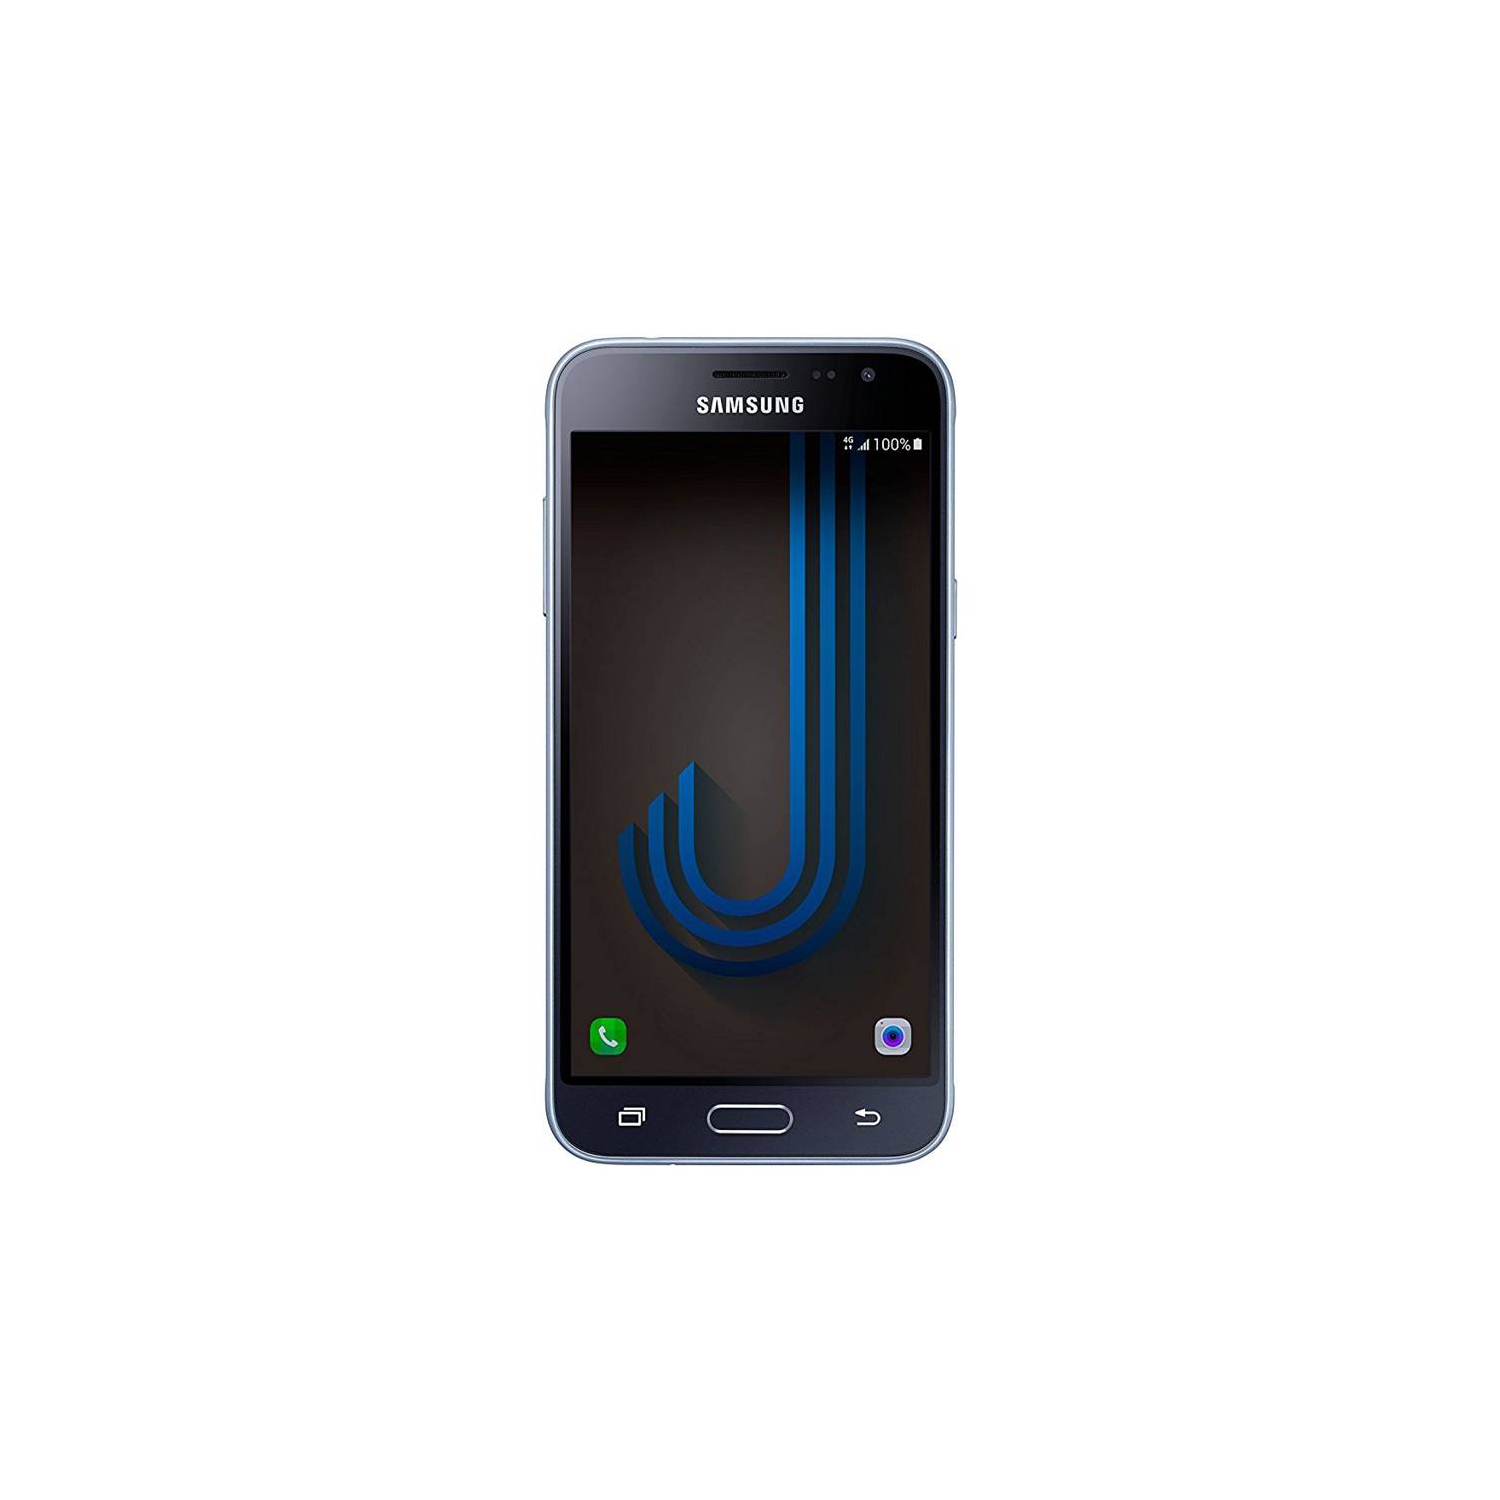 Samsung Galaxy J3 16GB Smartphone (Unlocked) - Black - Open Box